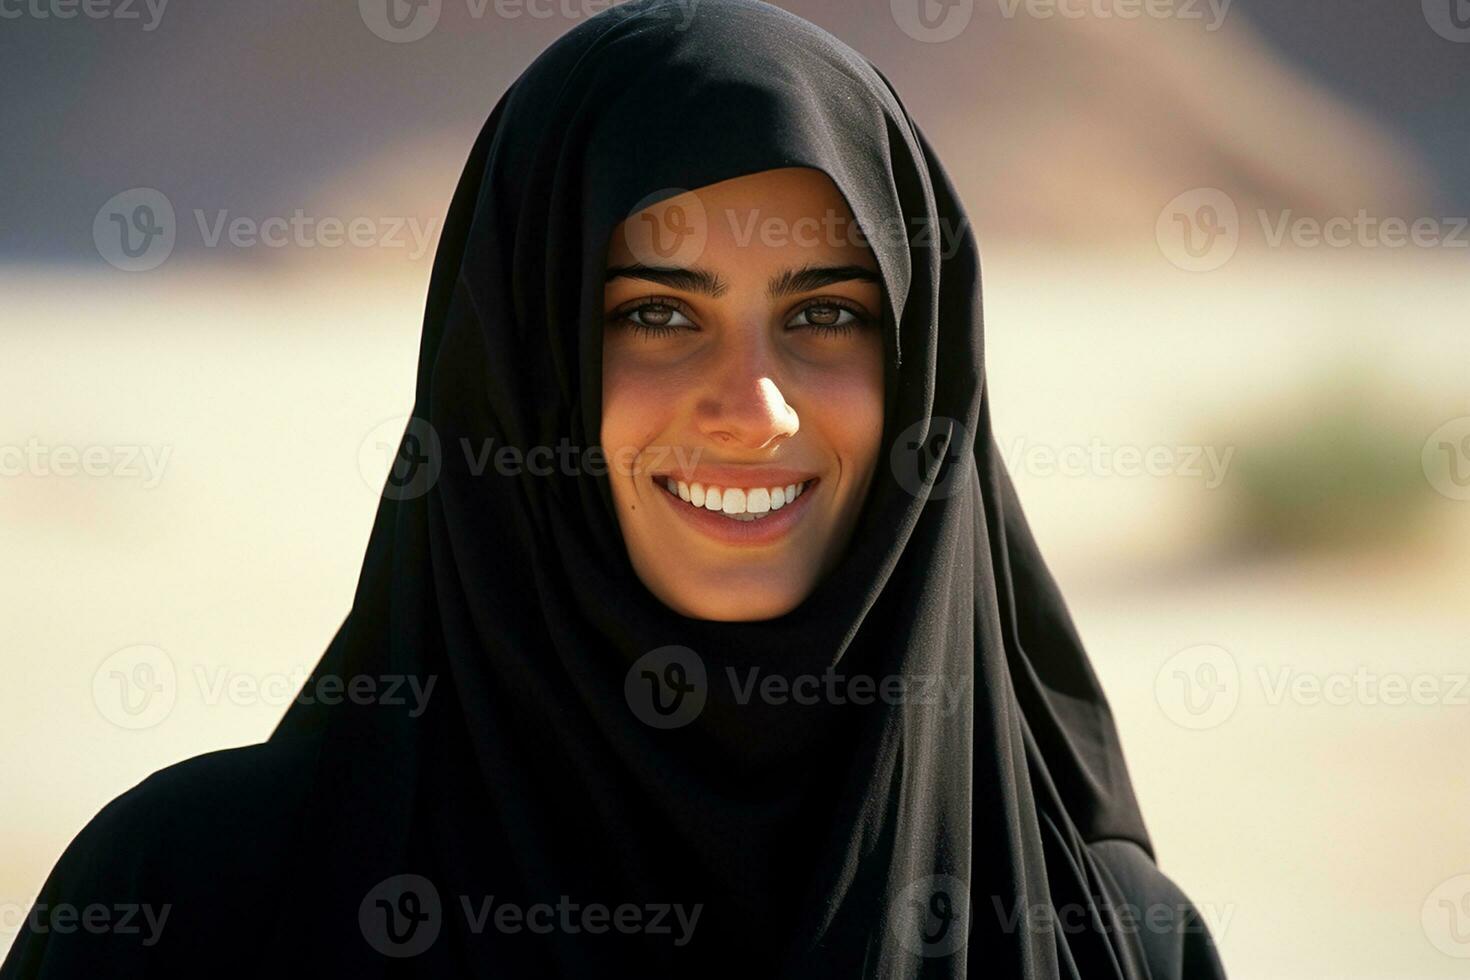 AI generated Portrait of a beautiful Muslim woman wearing hijab posing outdoors generative AI photo